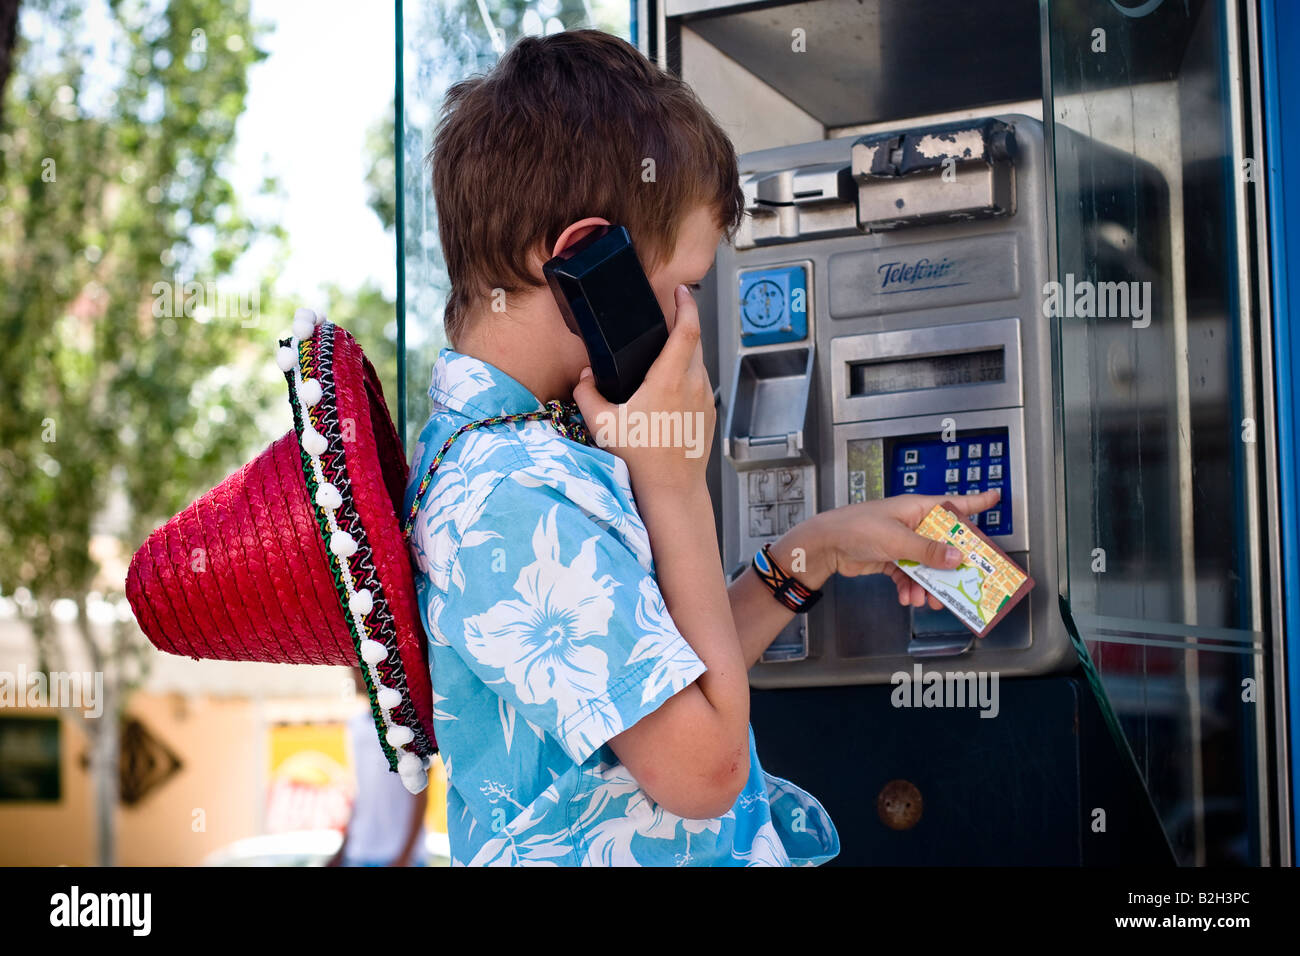 Young boy aged 7-8 makes phone call in public telephone box of the spanish telecom provider Telefonica in Cala Ratjada, Majorca Stock Photo